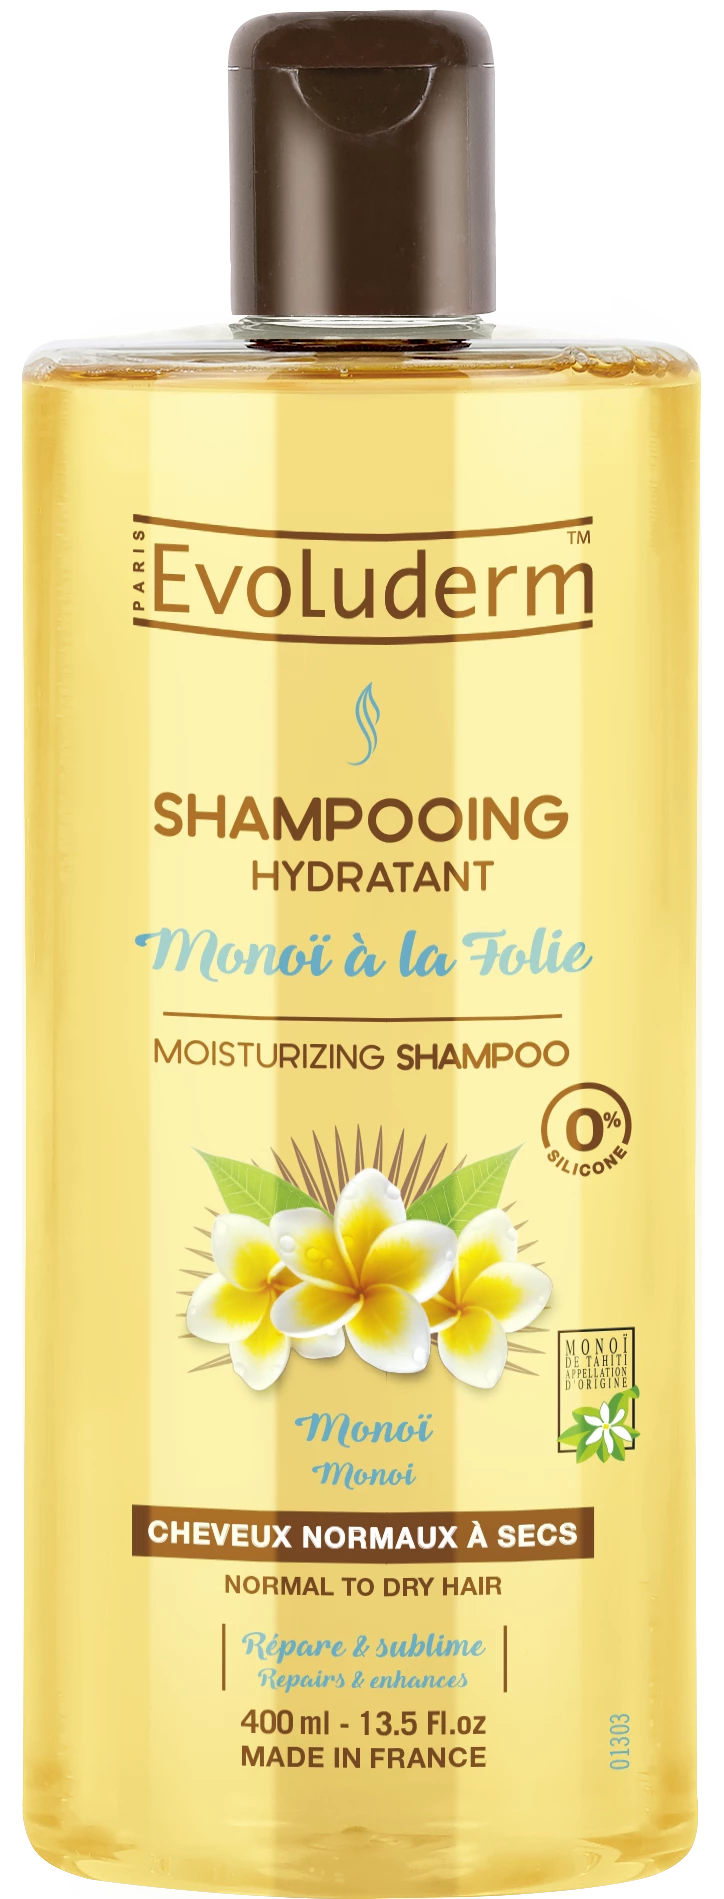 Monoi à la Folie Moisturizing Shampoo, 400ml - EVOLUDERM